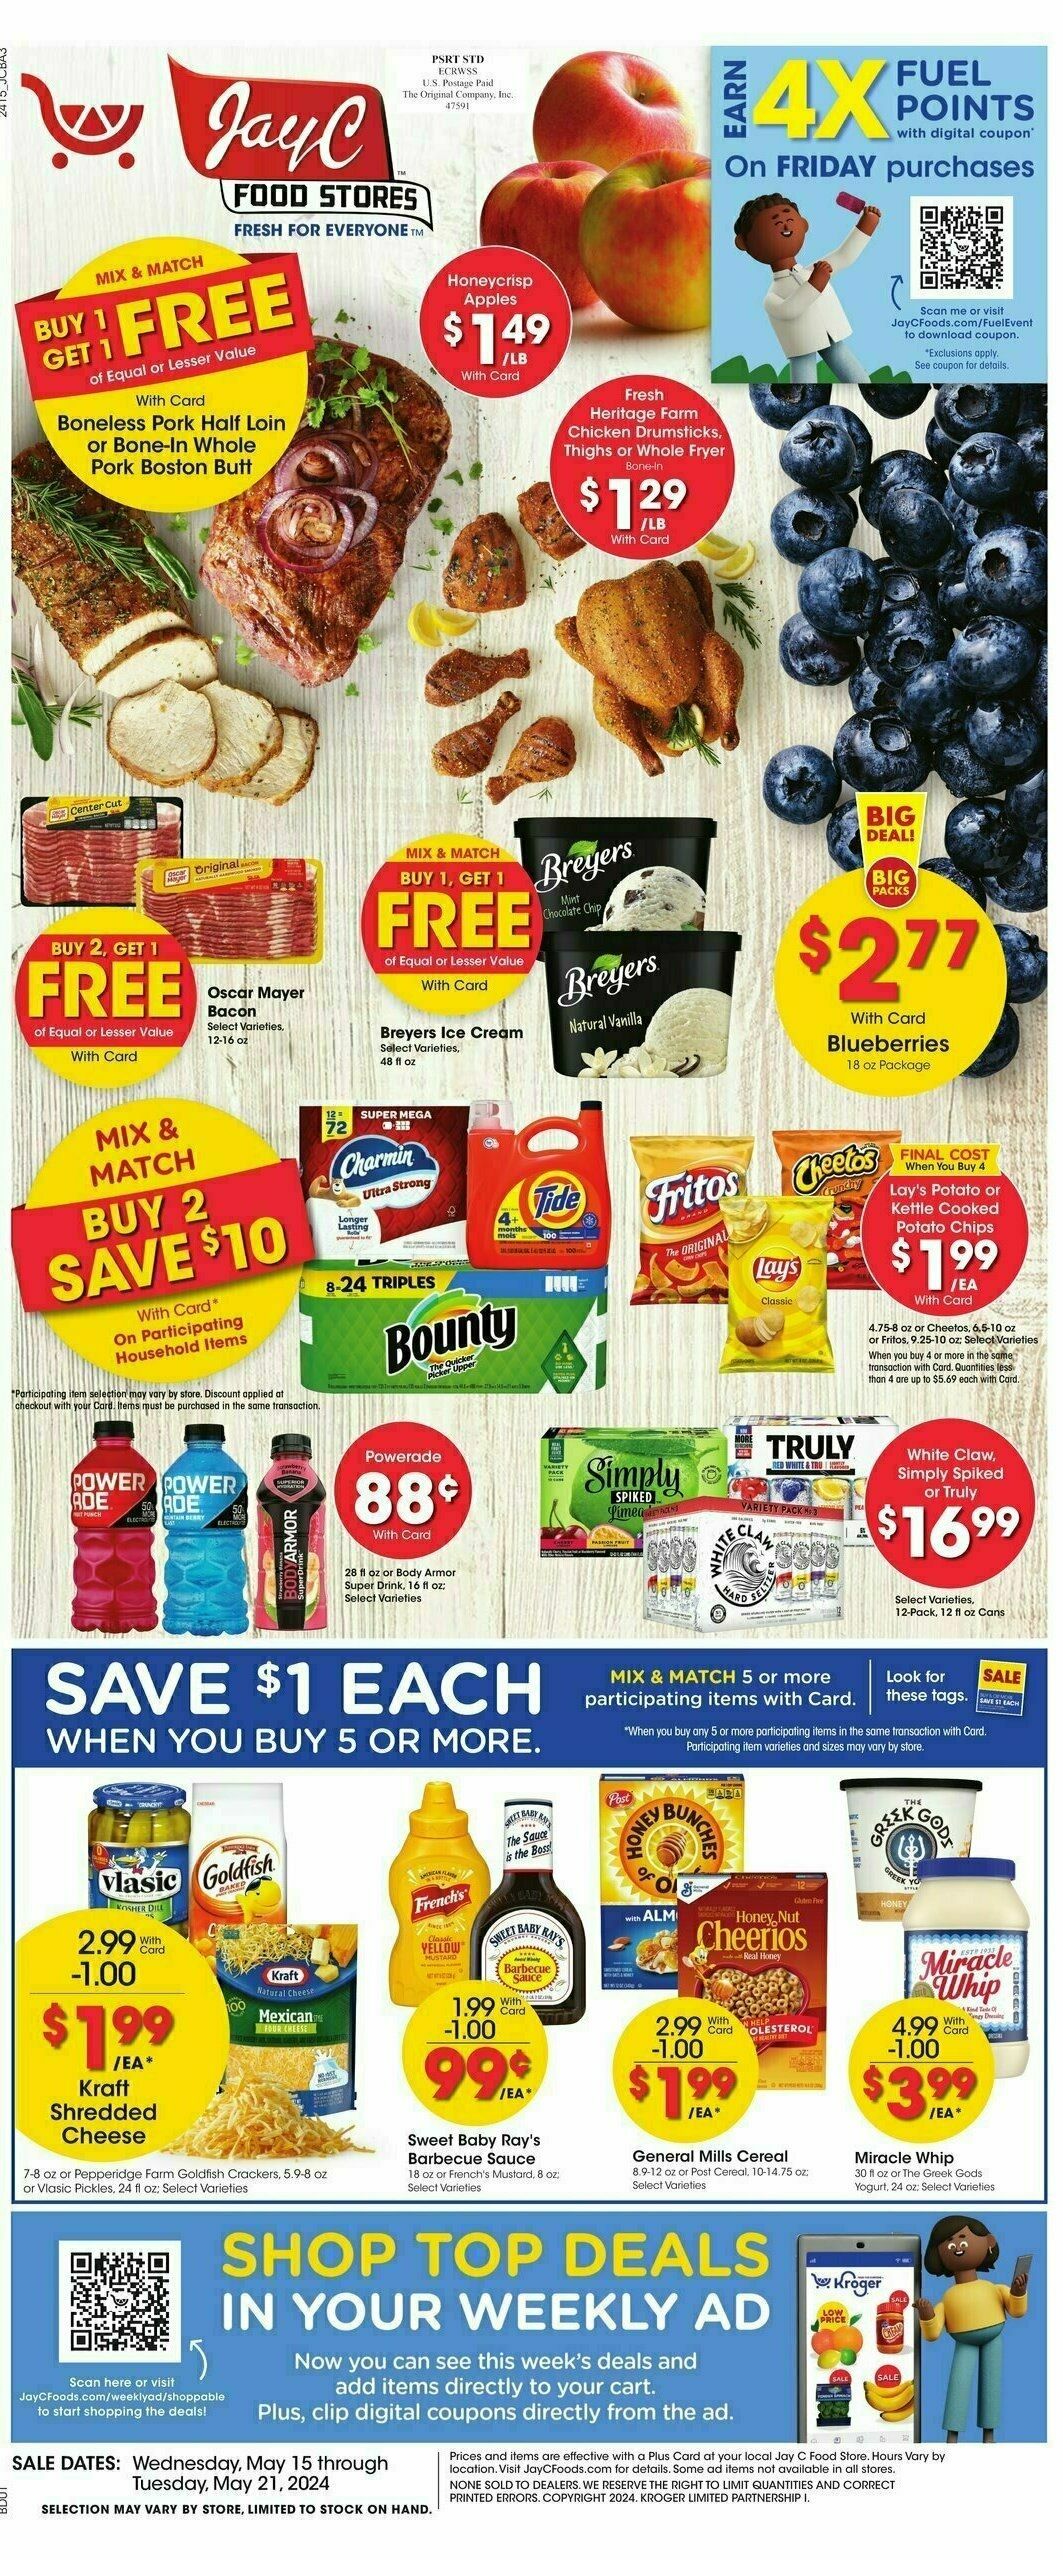 Jay C Food Weekly Ad from May 15